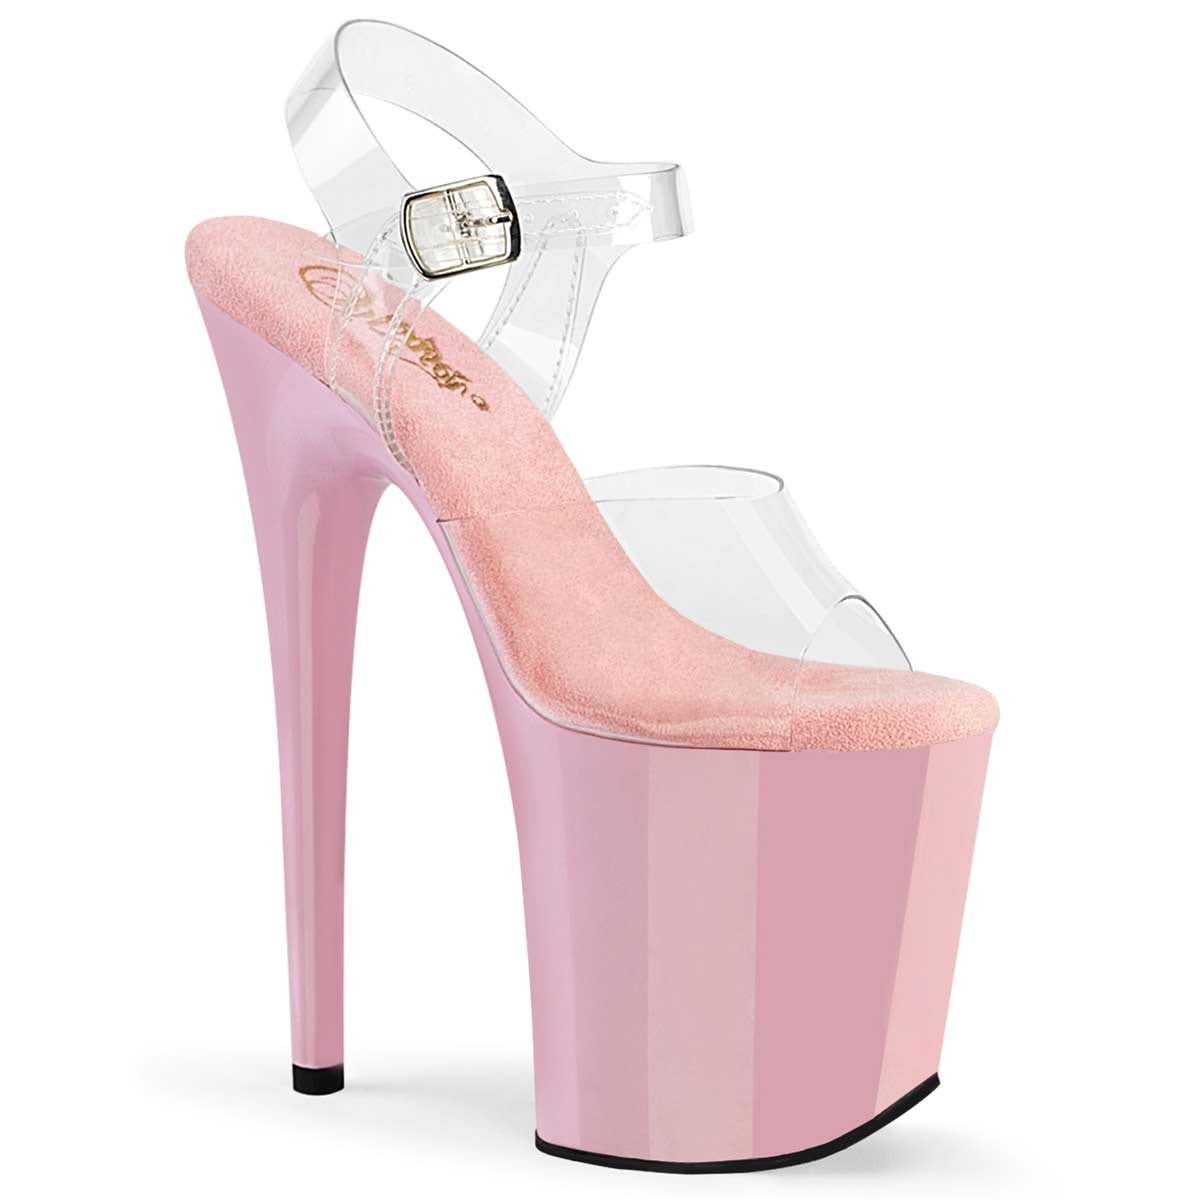 Pleaser Flamingo-808 - Clear Pink in Sexy Heels & Platforms - $57.95